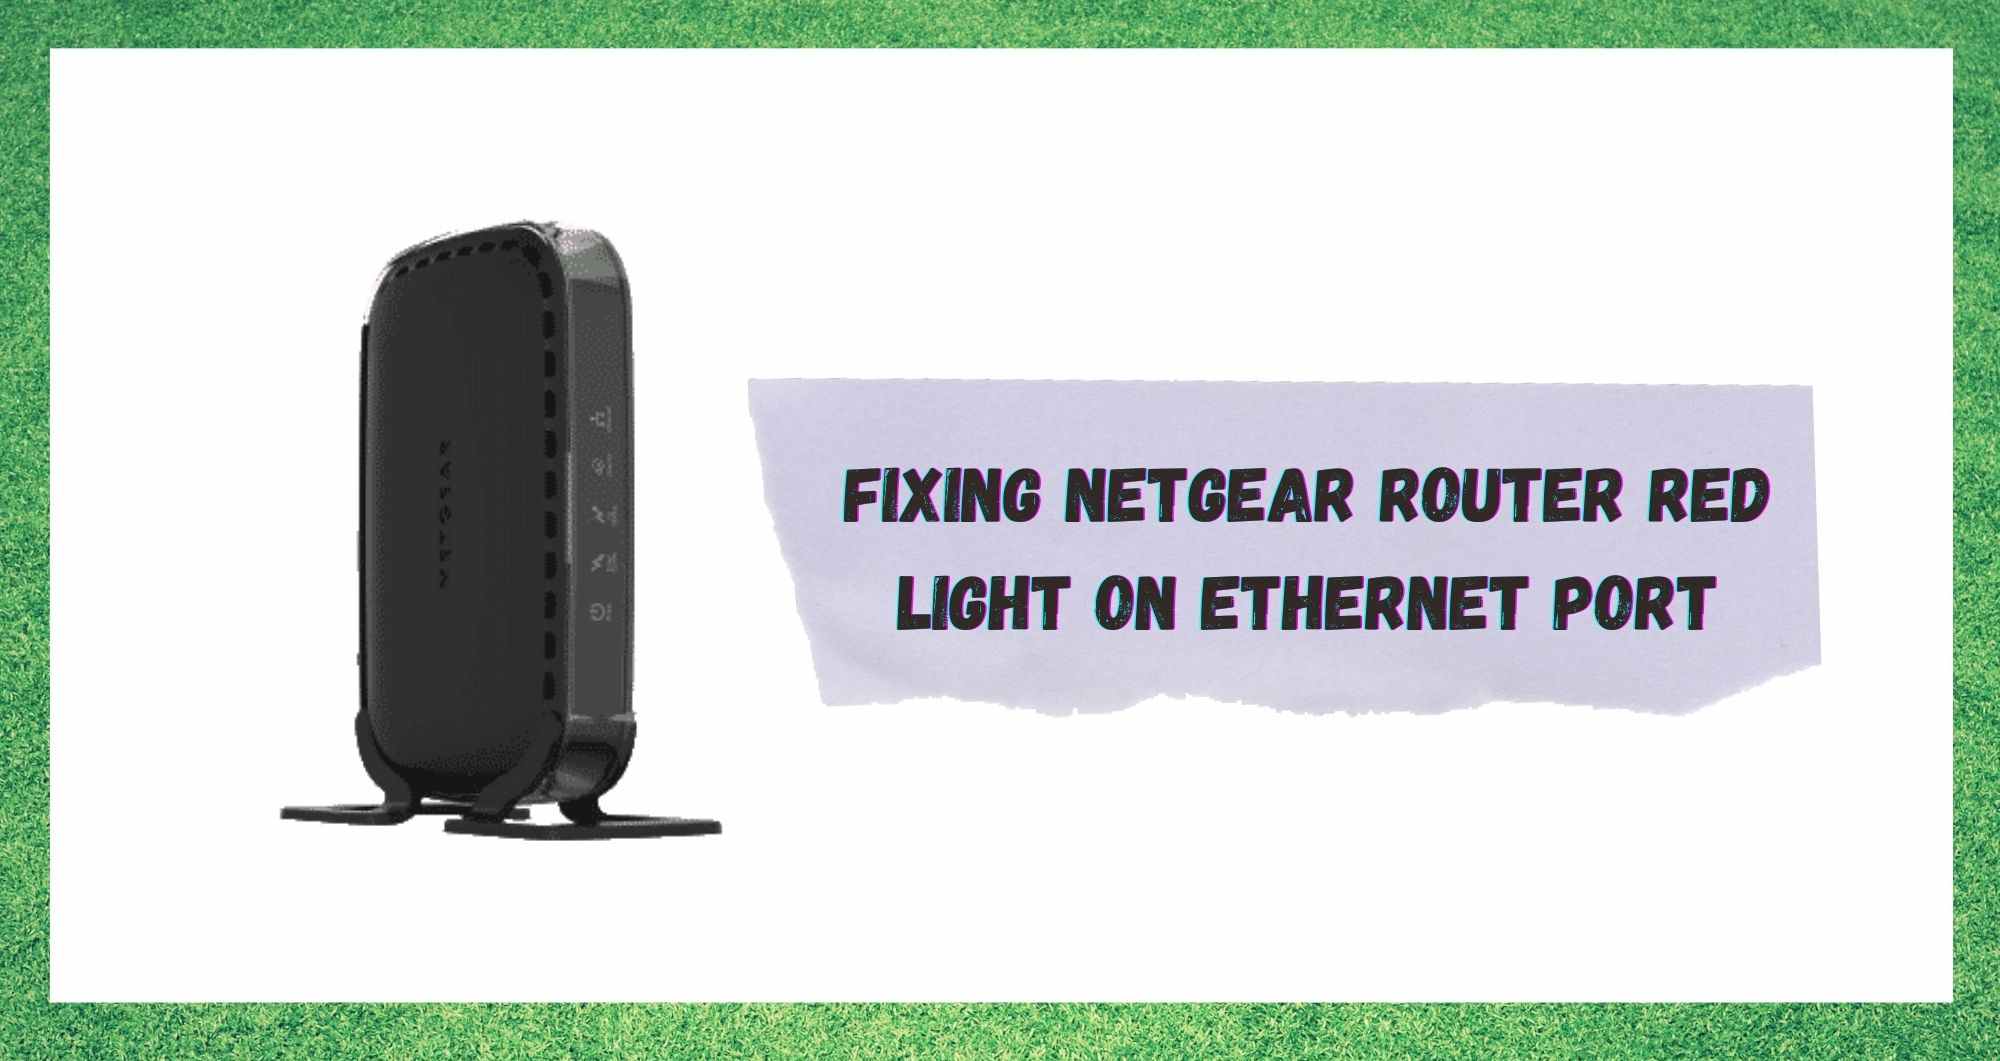 Netgear Router Κόκκινο φως στη θύρα Ethernet: 4 τρόποι για να διορθώσετε